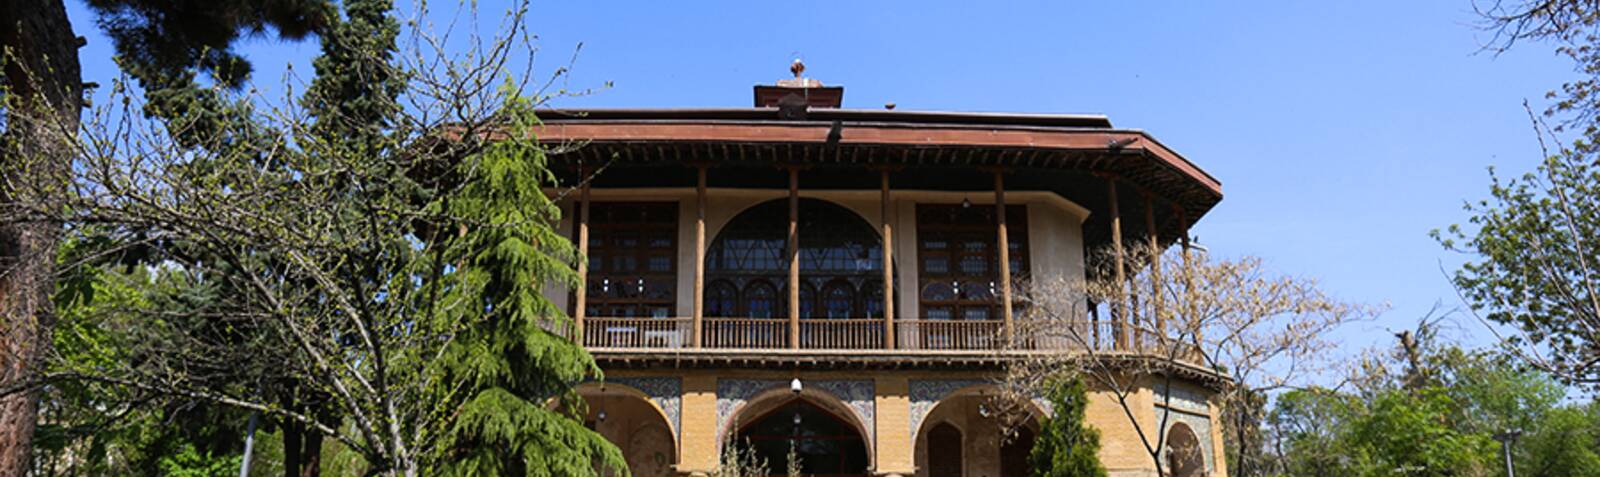 Chehel Sotoun Palace of Qazvin